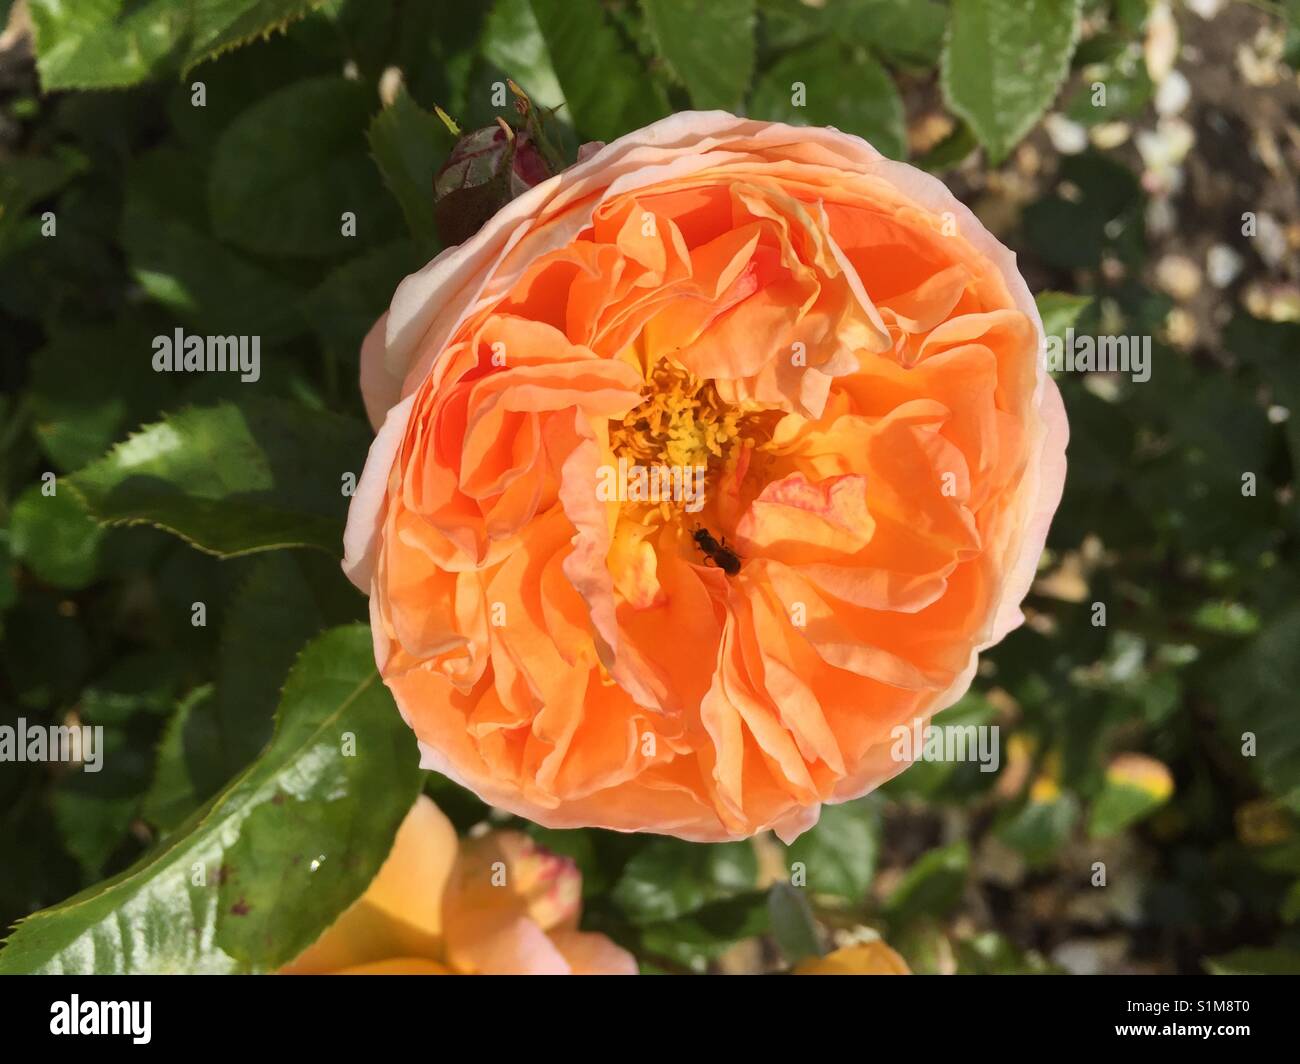 Floridunda rosette Form voll doppelt Peach rose'S unlight Romantica". Single Rose Blüte mit grünen Blättern Hintergrund Stockfoto